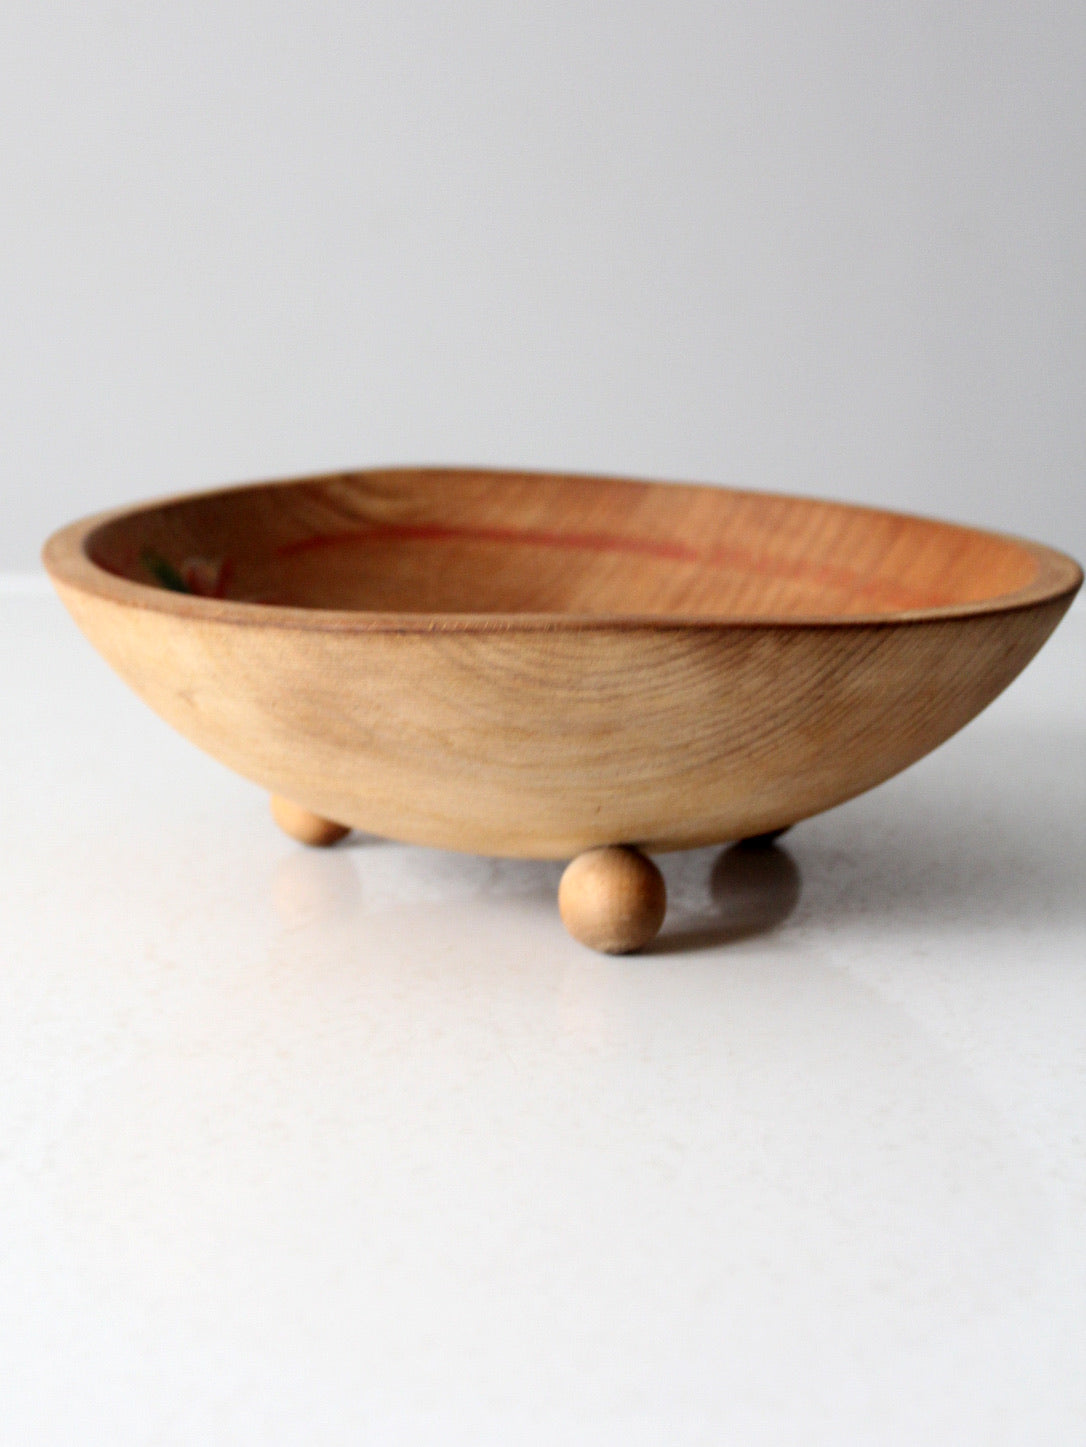 vintage hand-painted wood bowl